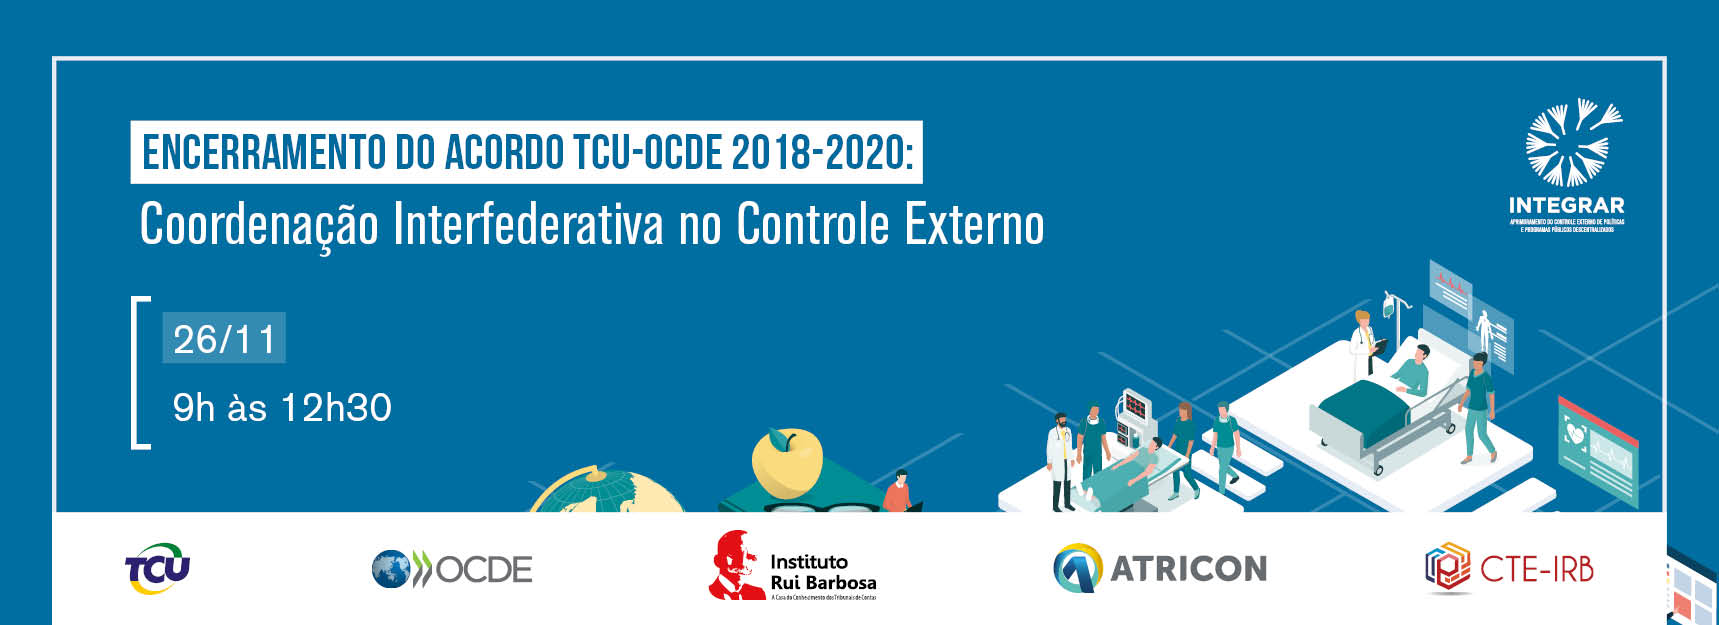 Acordo TCU-OCDE - Projeto Integrar